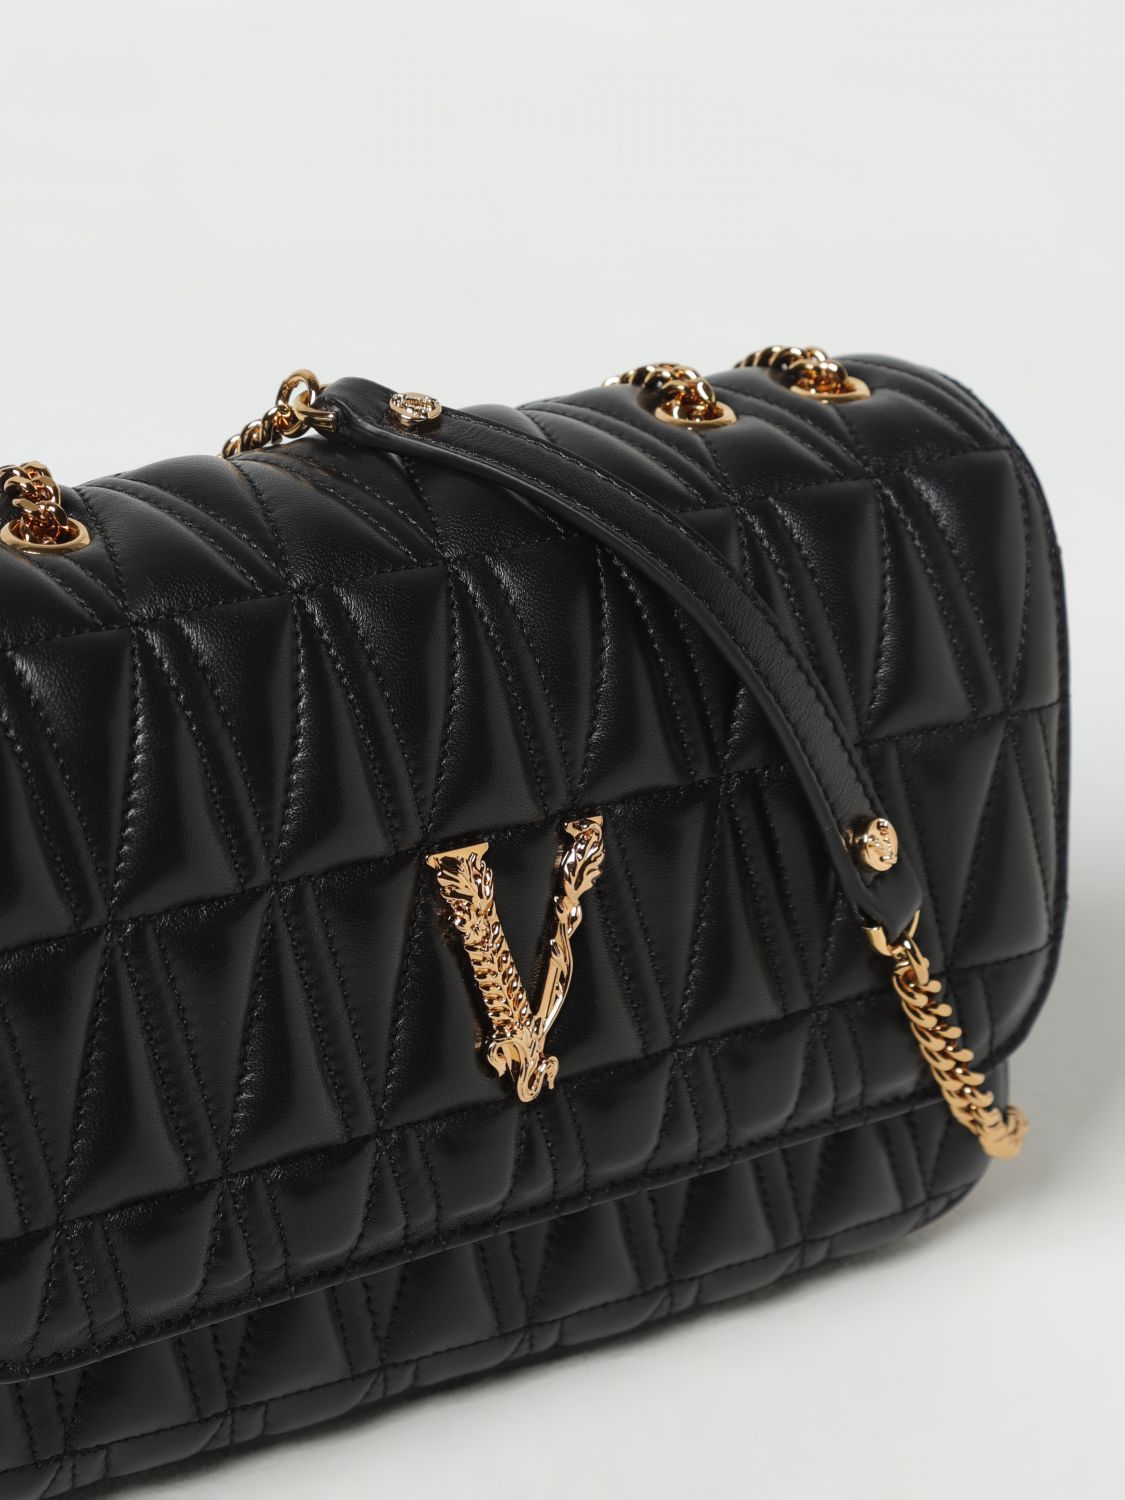 VERSACE: Virtus bag in quilted leather - Black  Versace shoulder bag  DBFH822D2NTRT online at